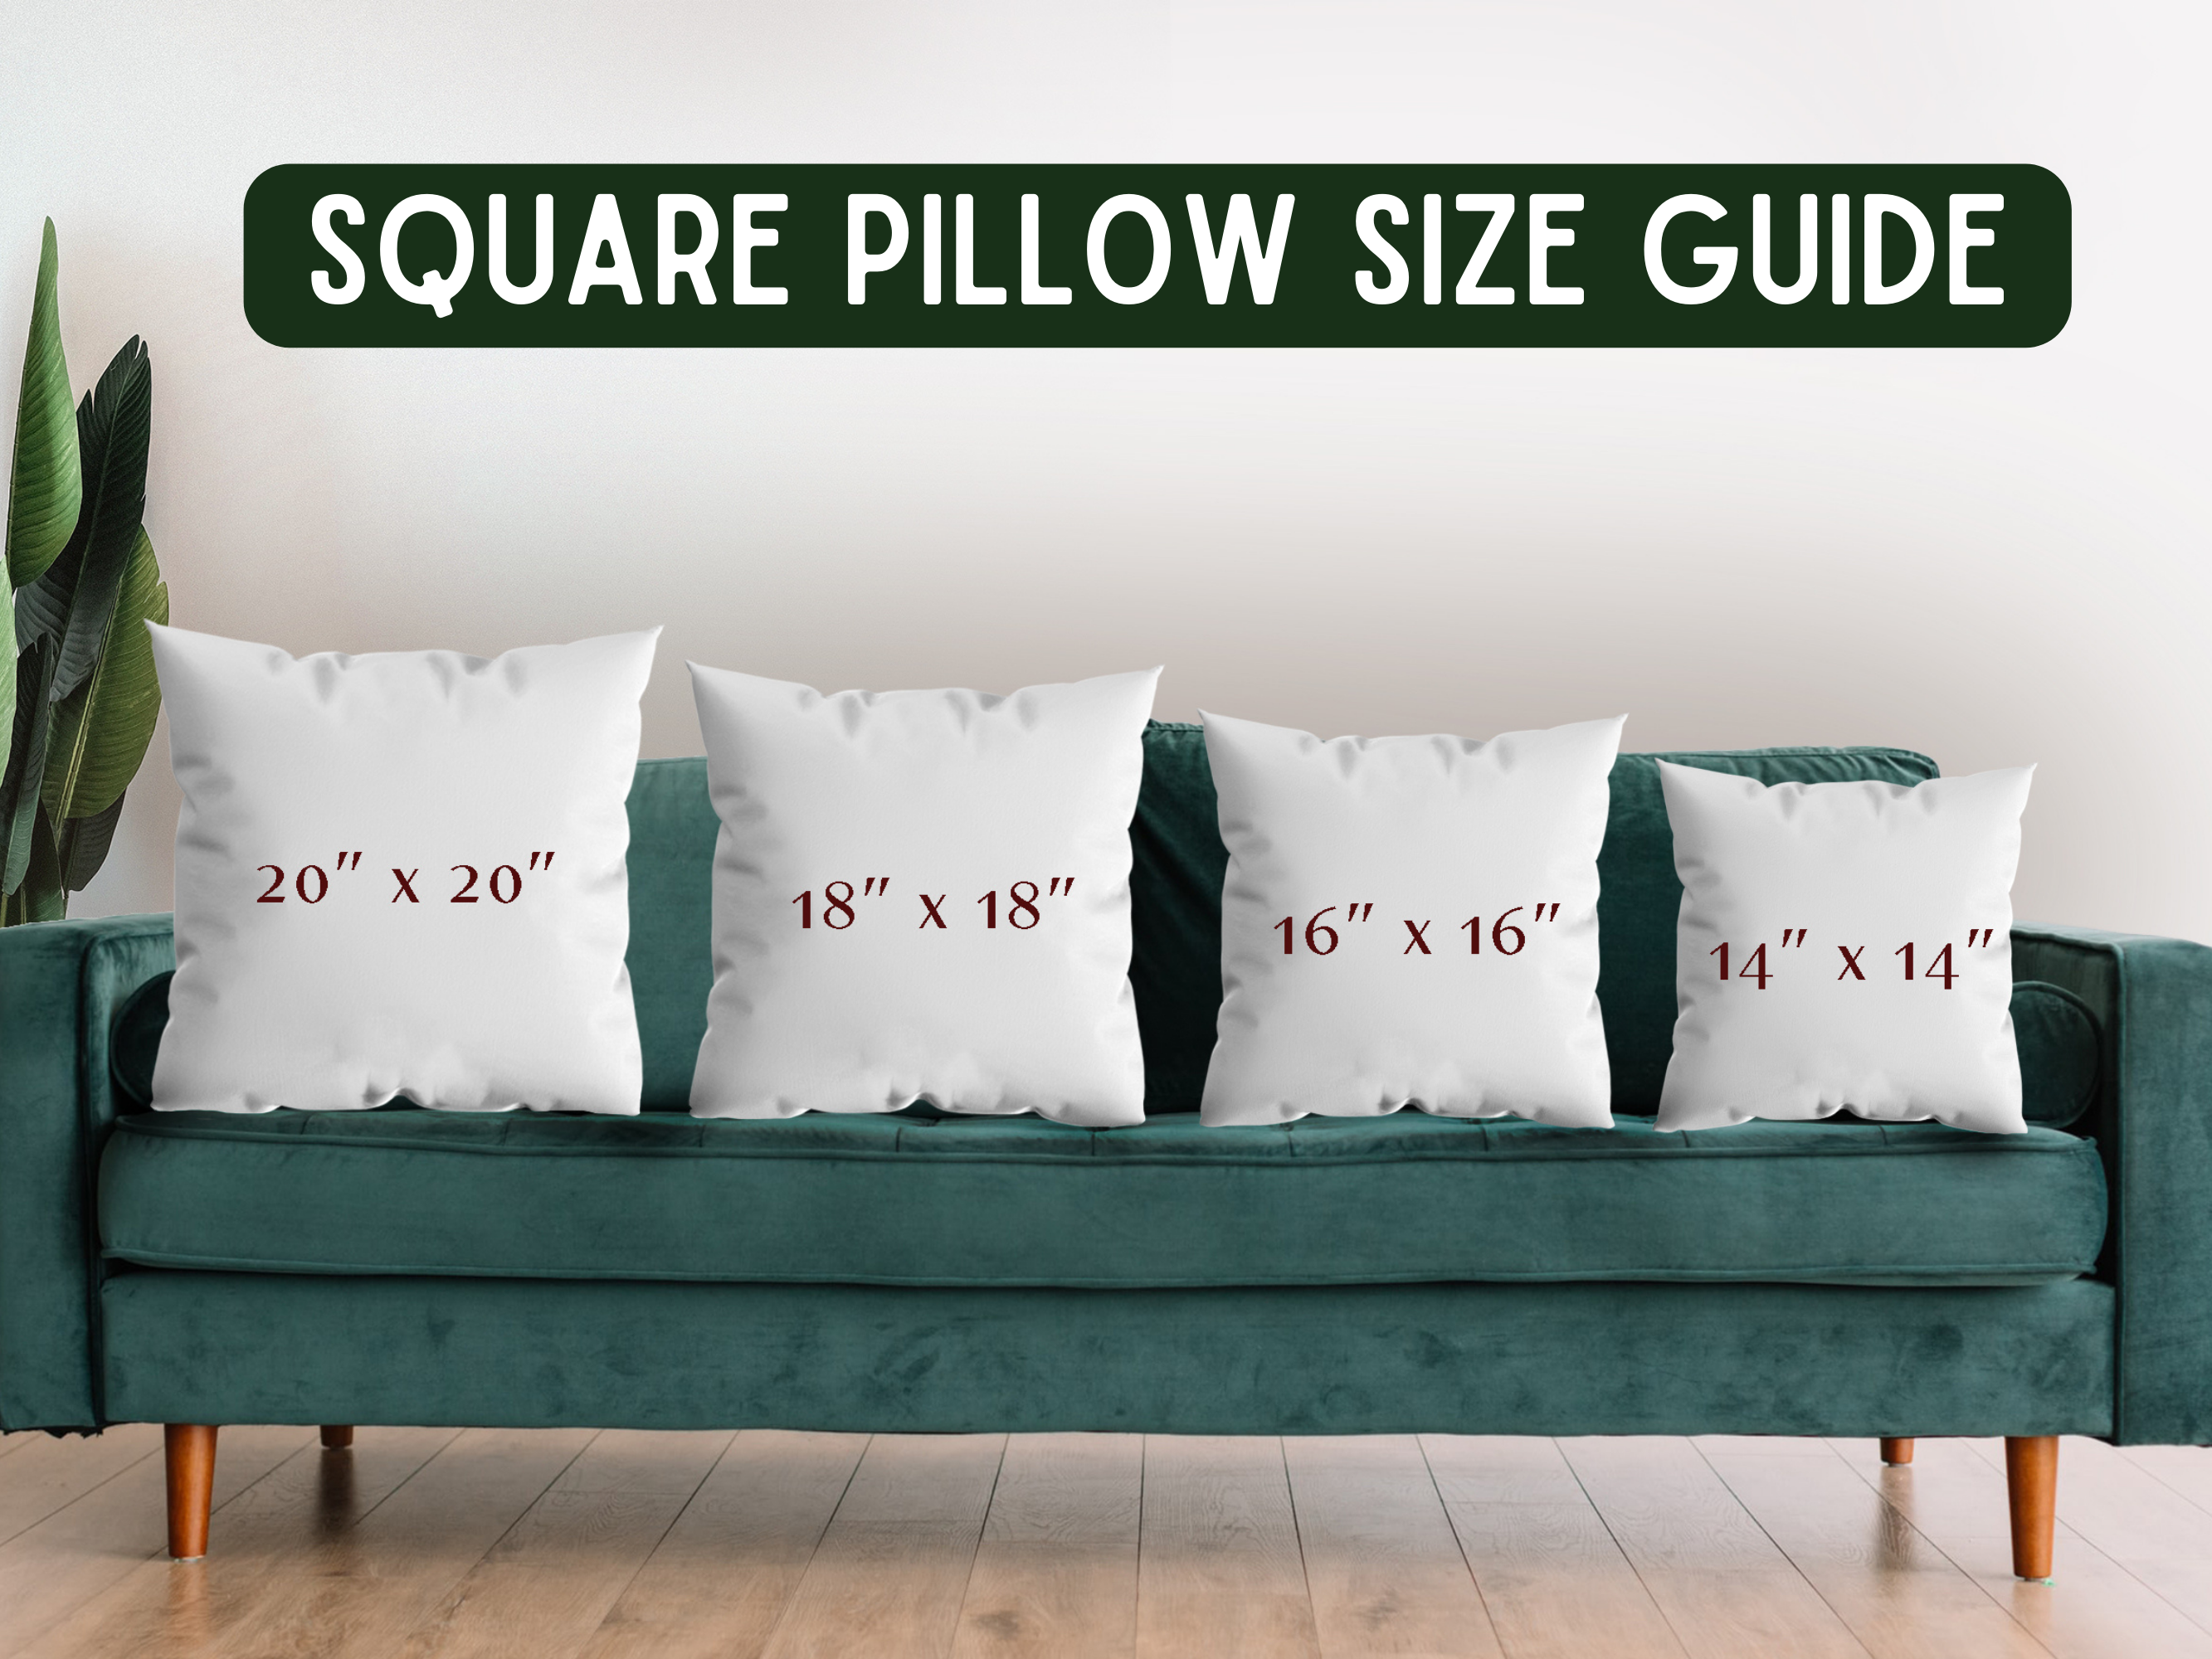 Lantsa Gifts Square Pillow Size Guide